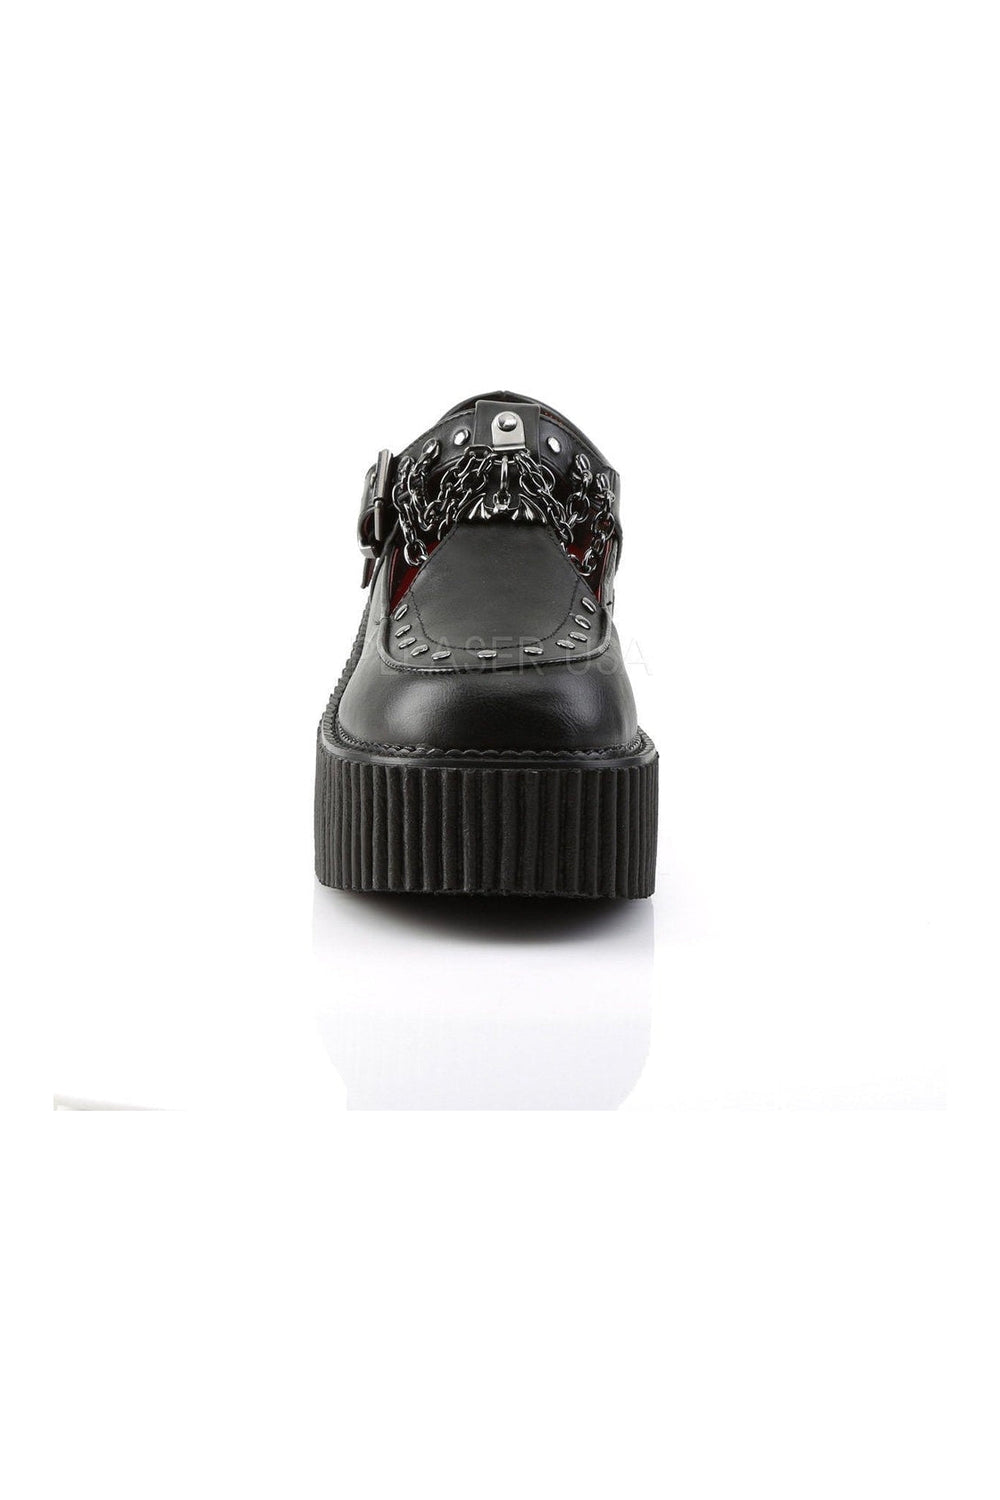 CREEPER-215 Demonia Shoe | Black Faux Leather-Demonia-Creepers-SEXYSHOES.COM